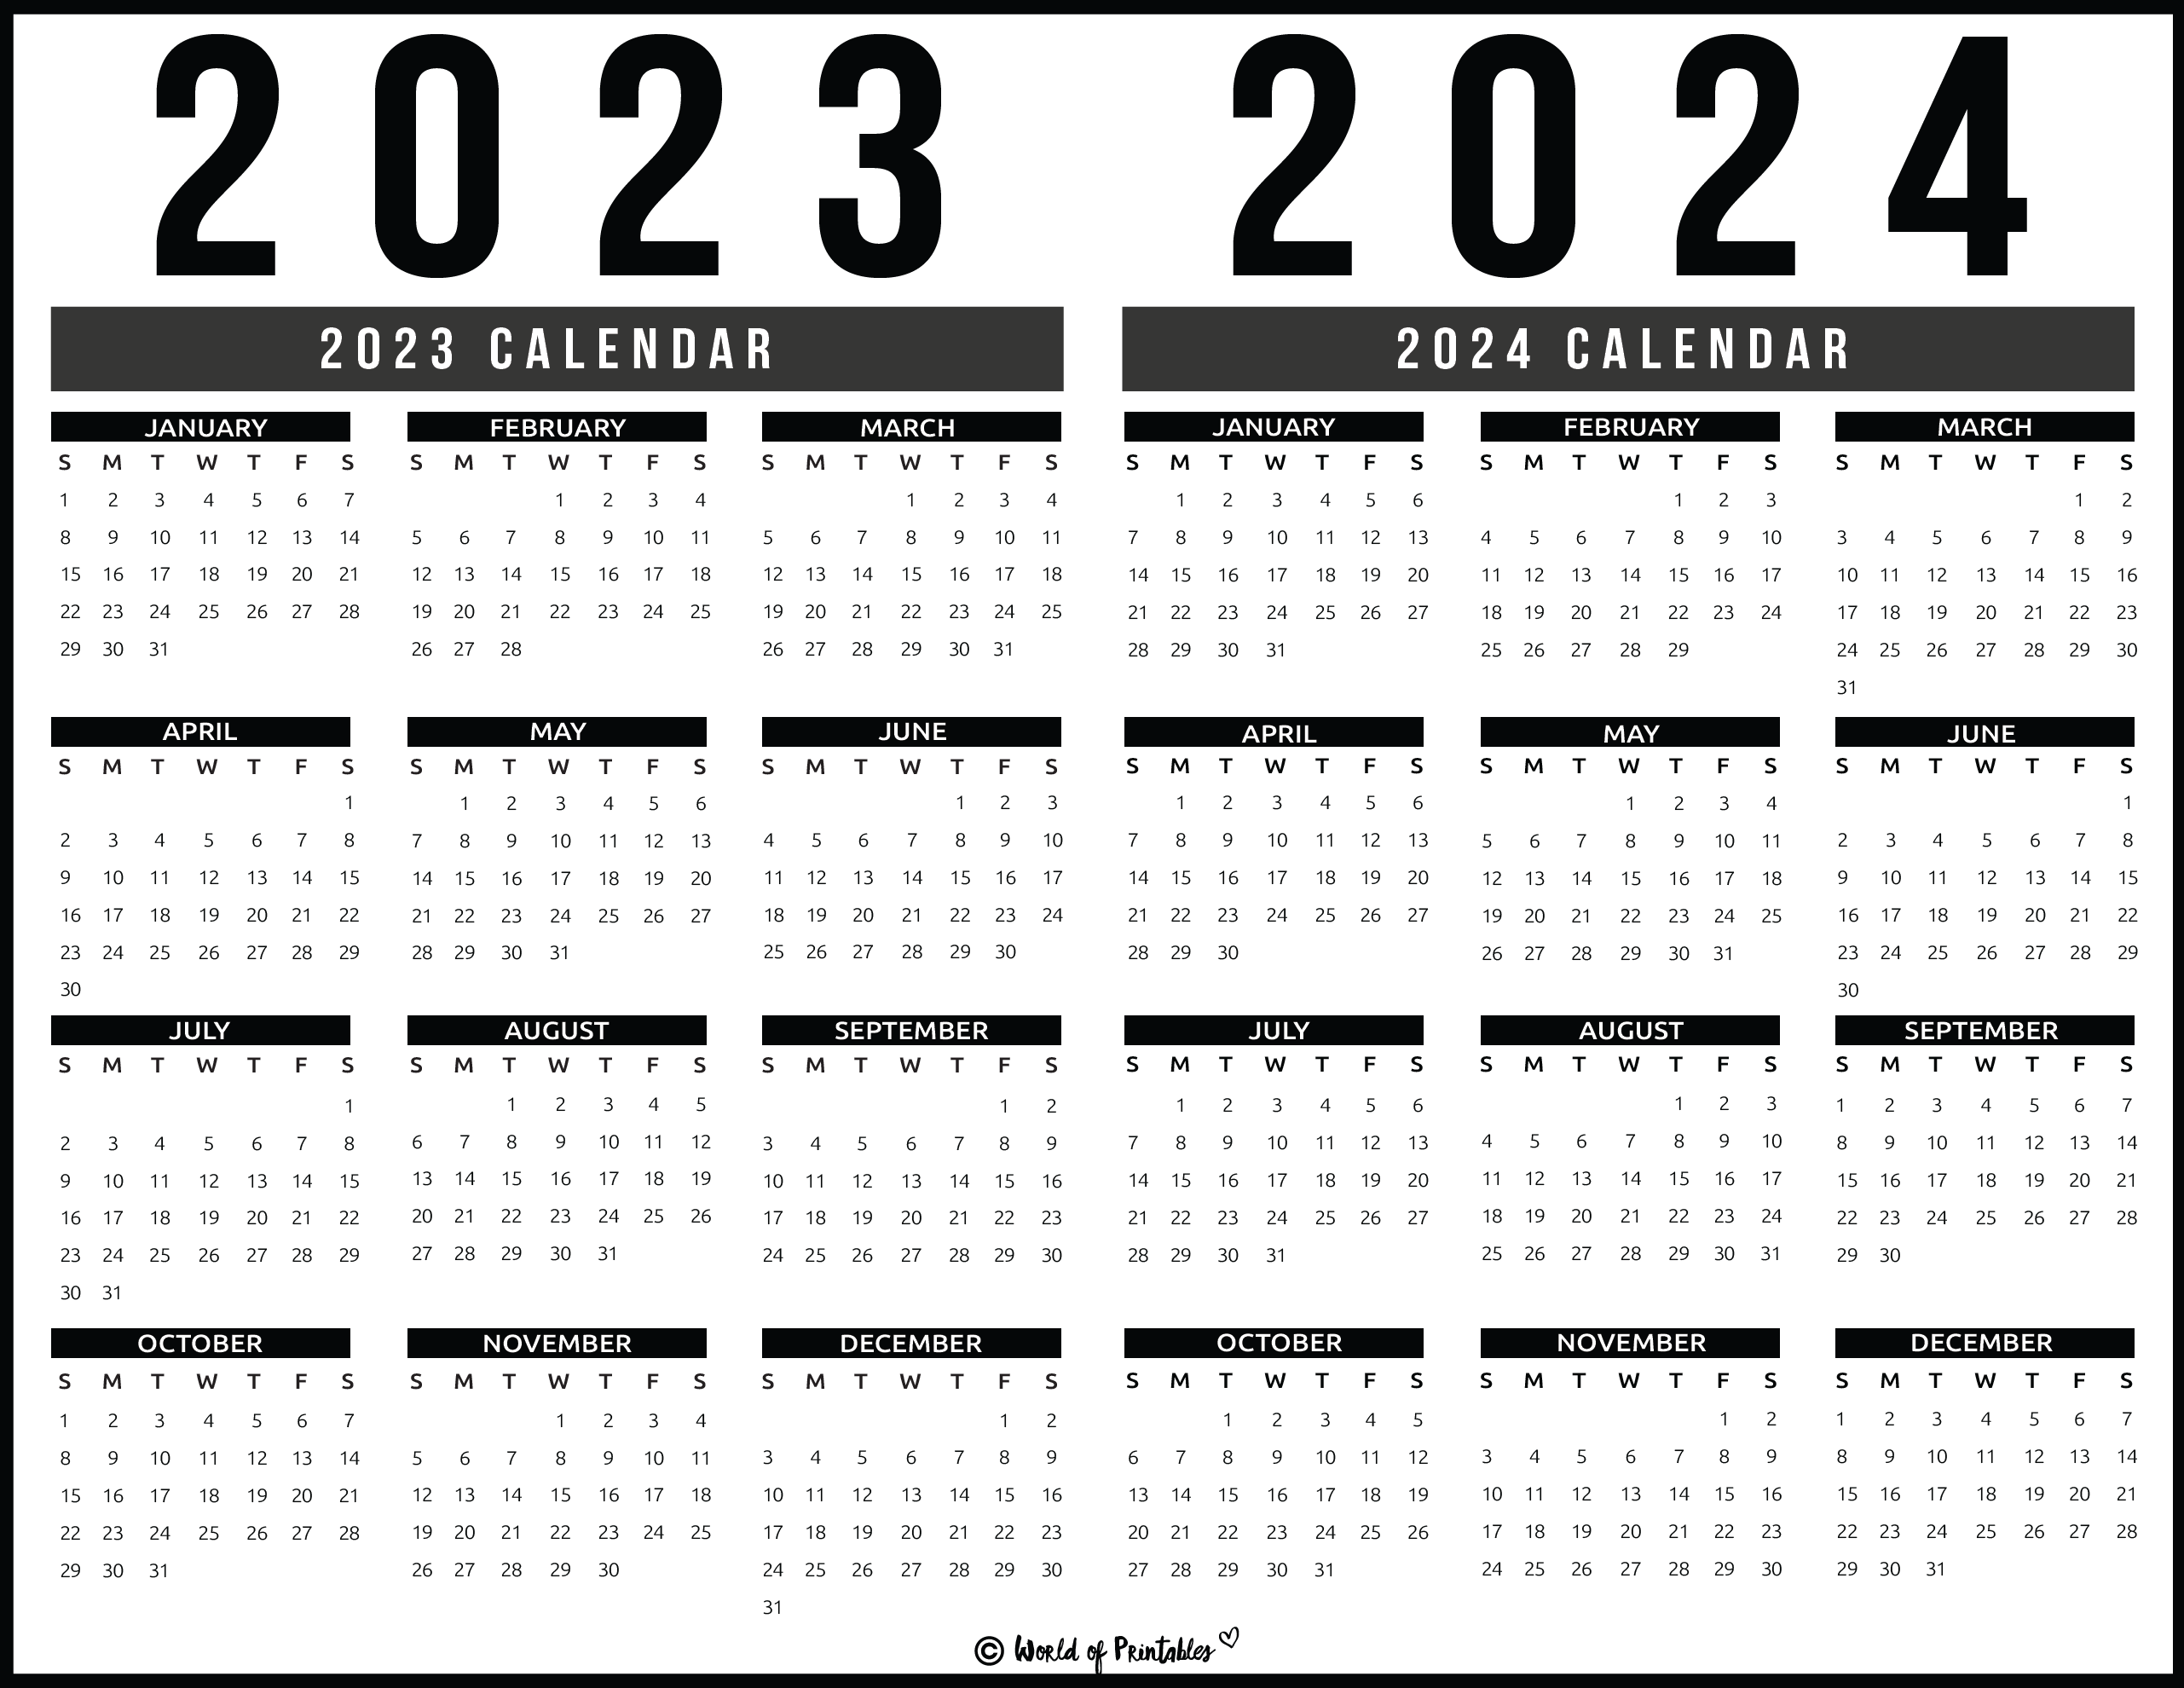 2023 2024 Calendar Free Printables - World Of Printables for 2023 And 2024 Calendar With Holidays Printable